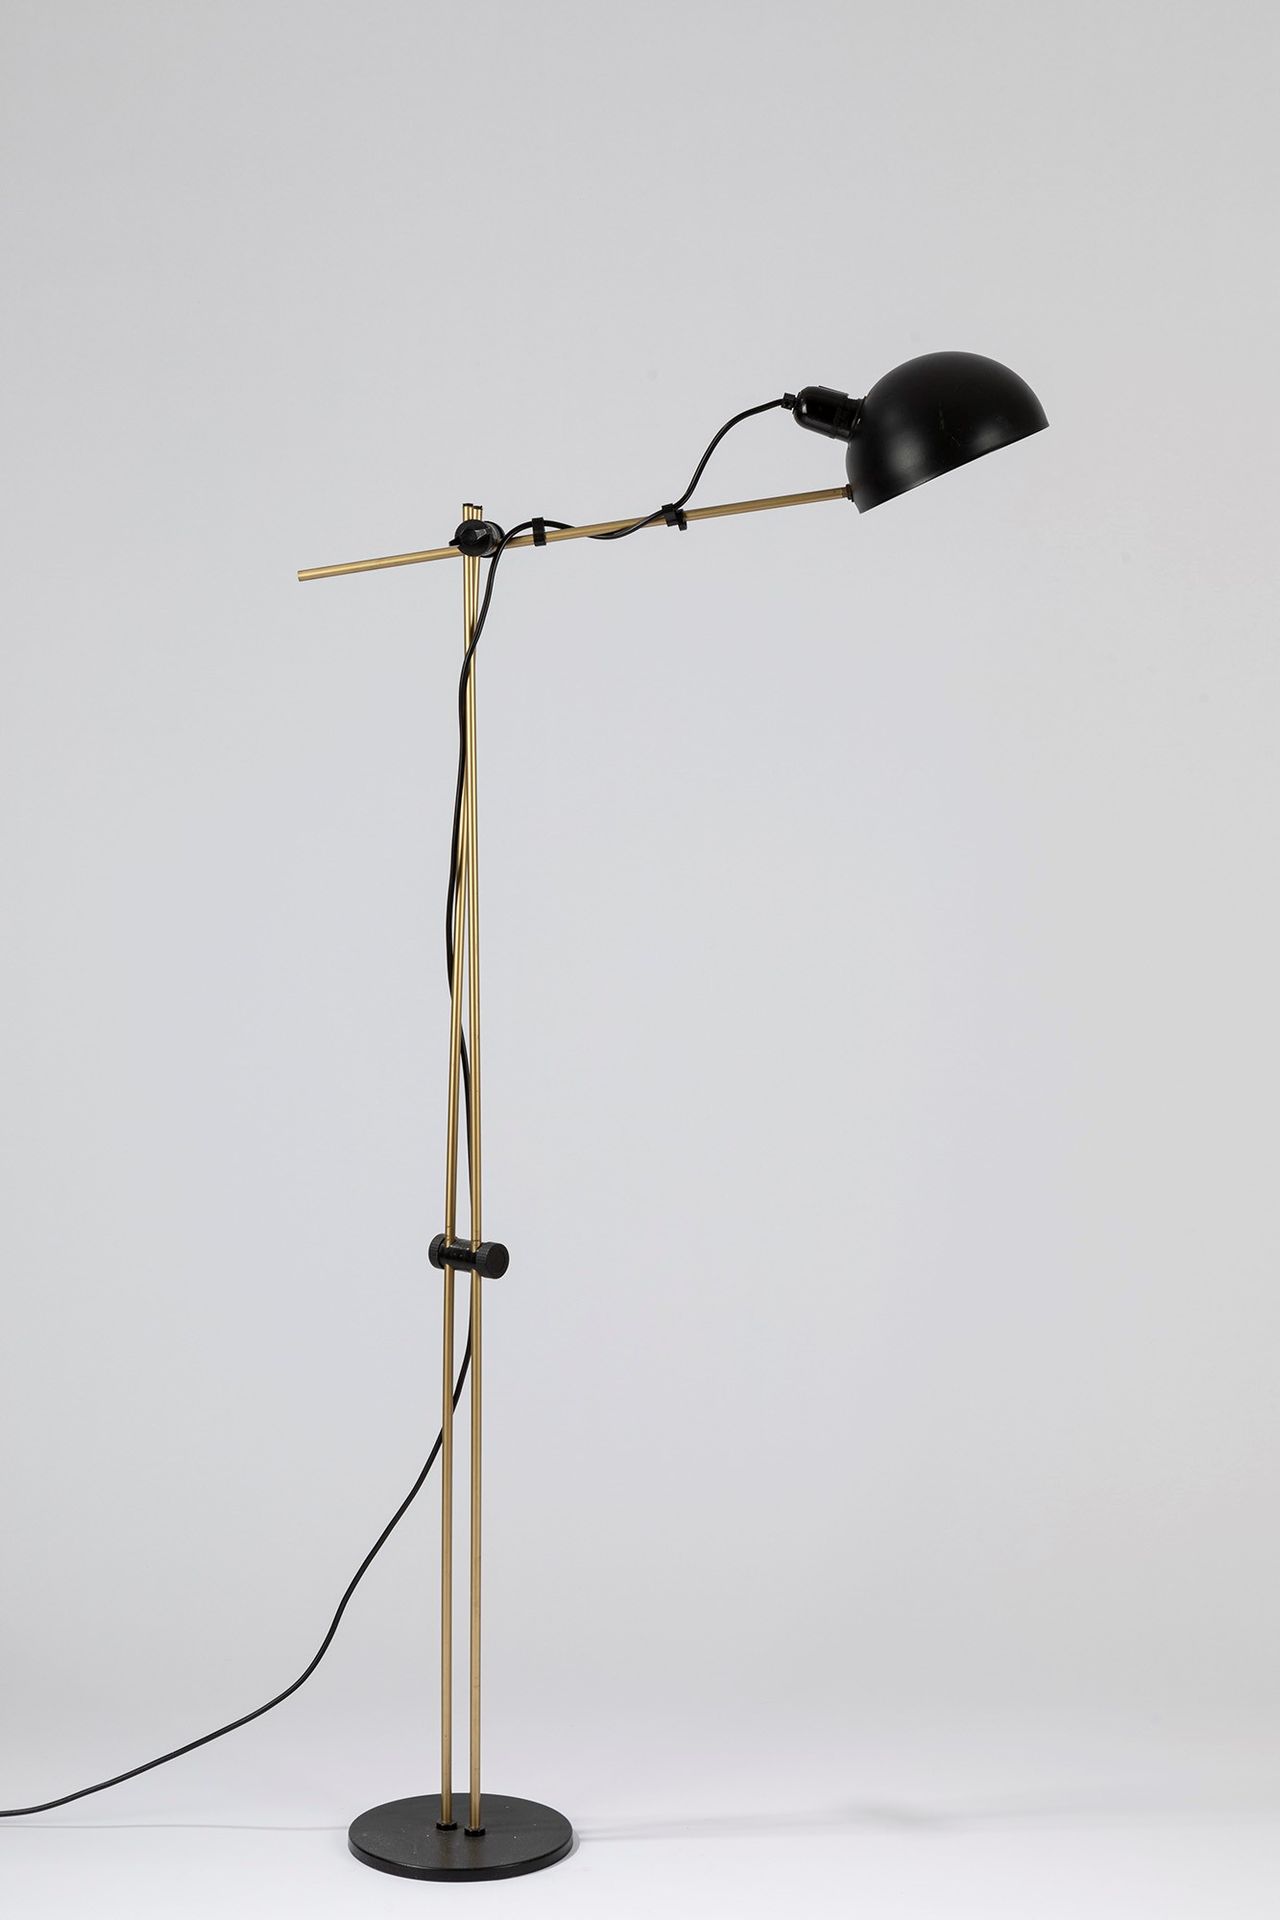 ITALIAN MANUFACTURE 落地灯，50年代

cm h 135 x 66
，黄铜和黑色舔金属。